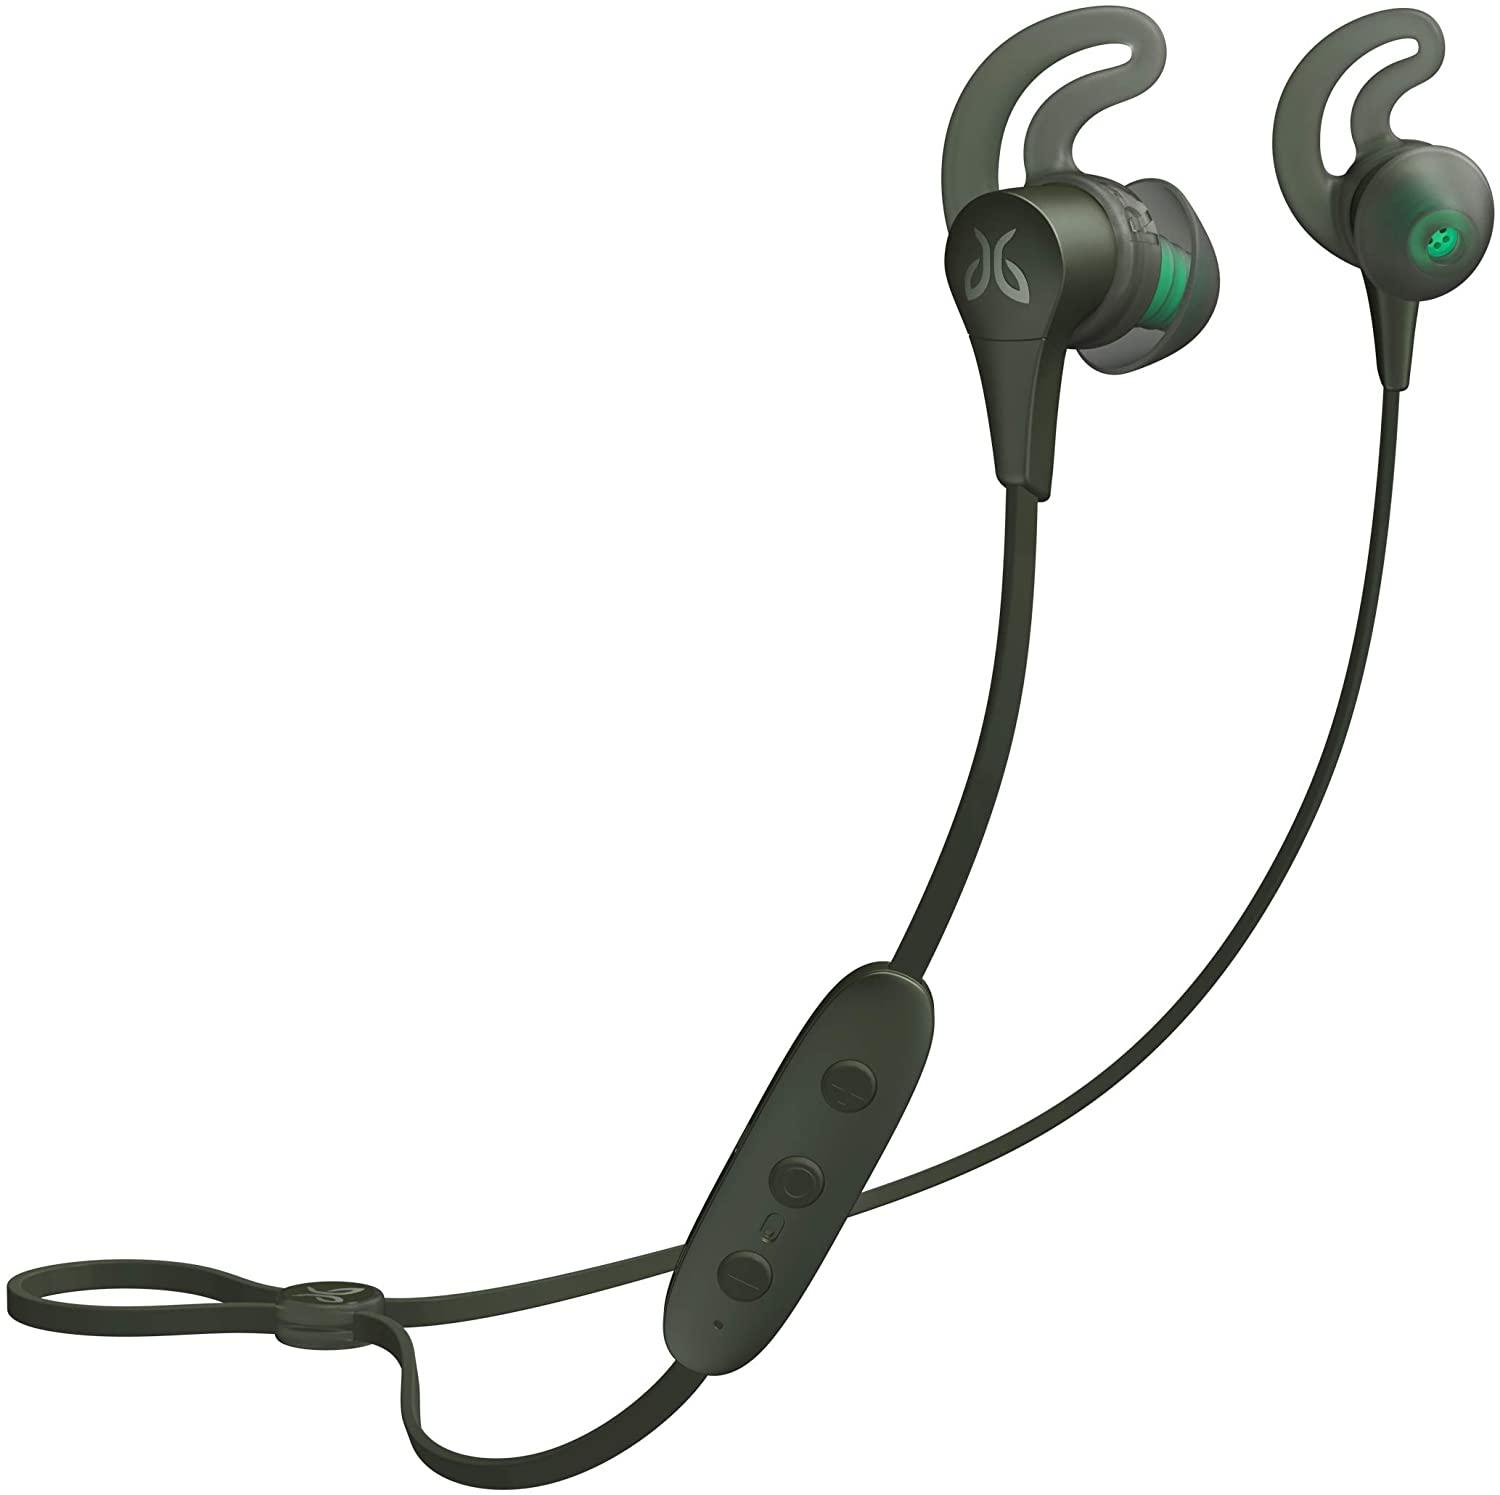 Jaybird X4 Wireless Bluetooth Headphones for $49.99 Shipped